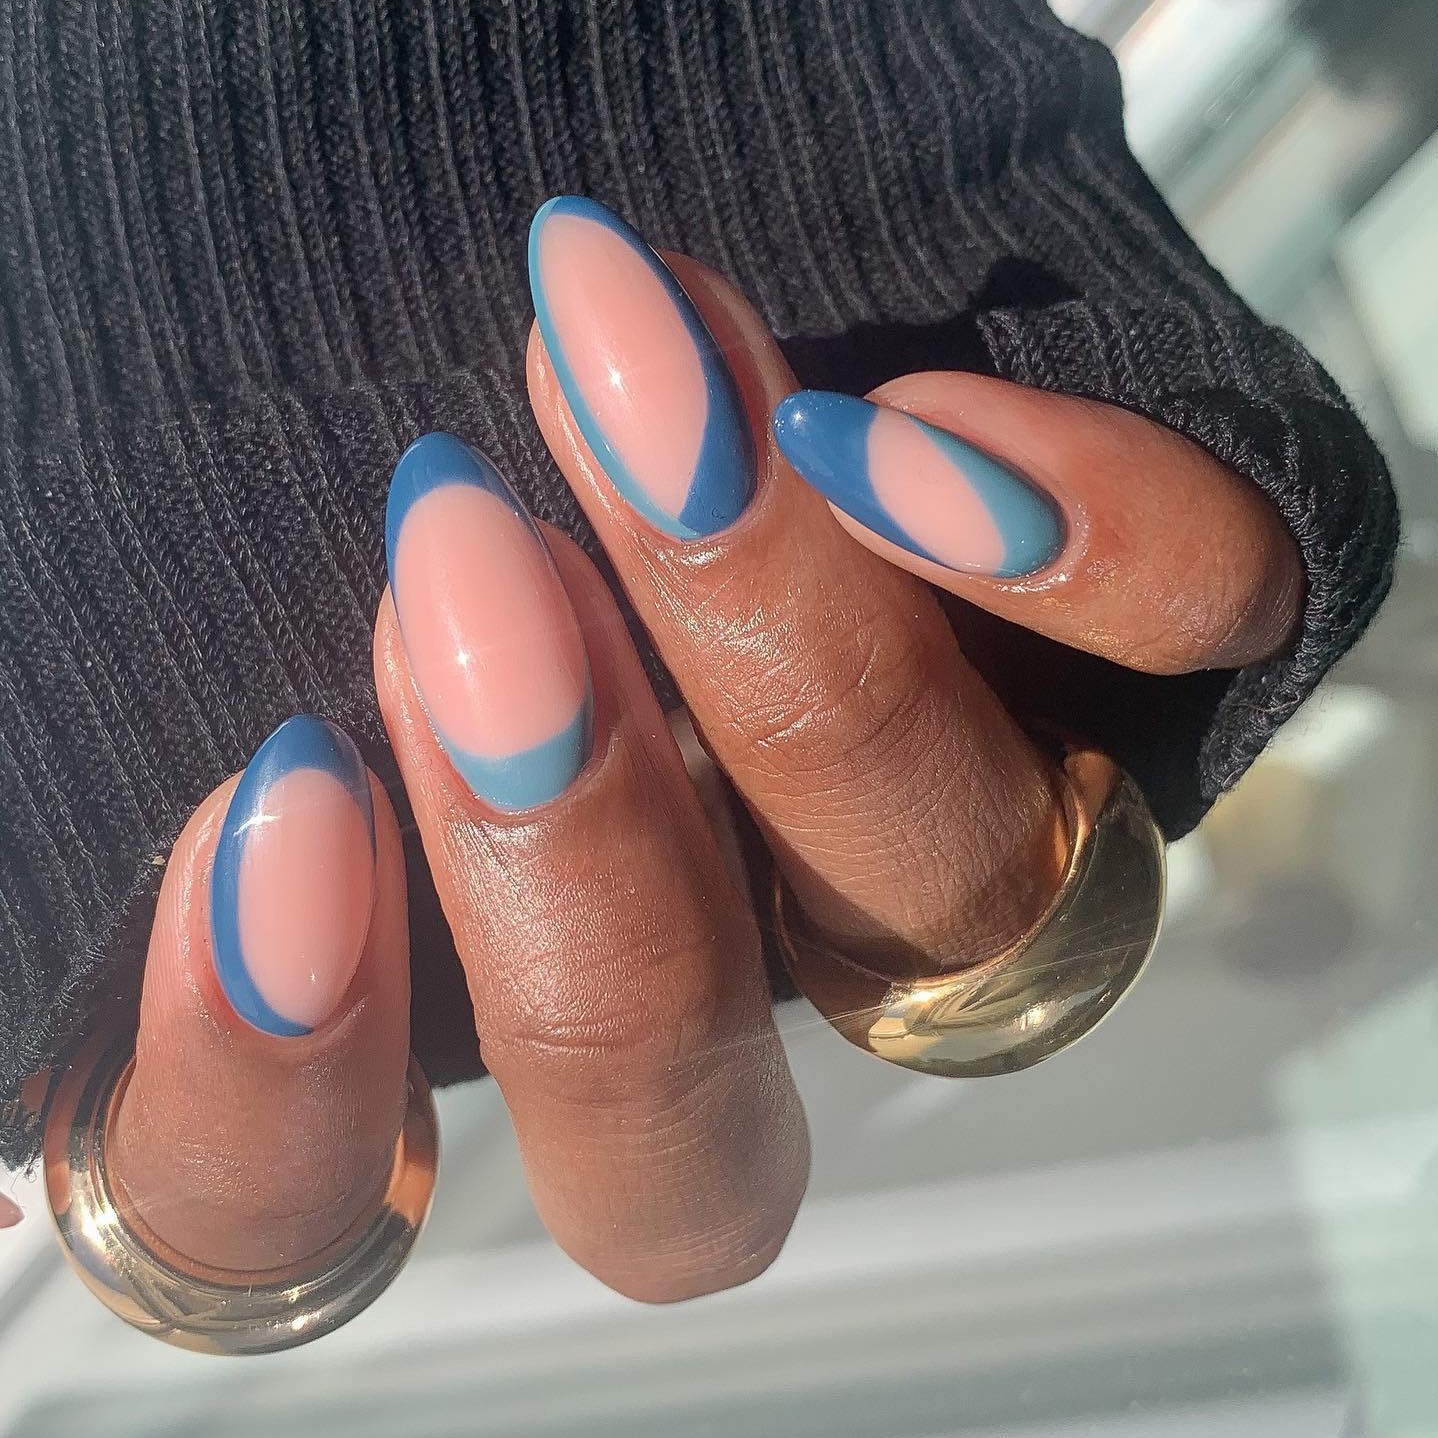 Tiffany Blue Nails - Fleur De Force